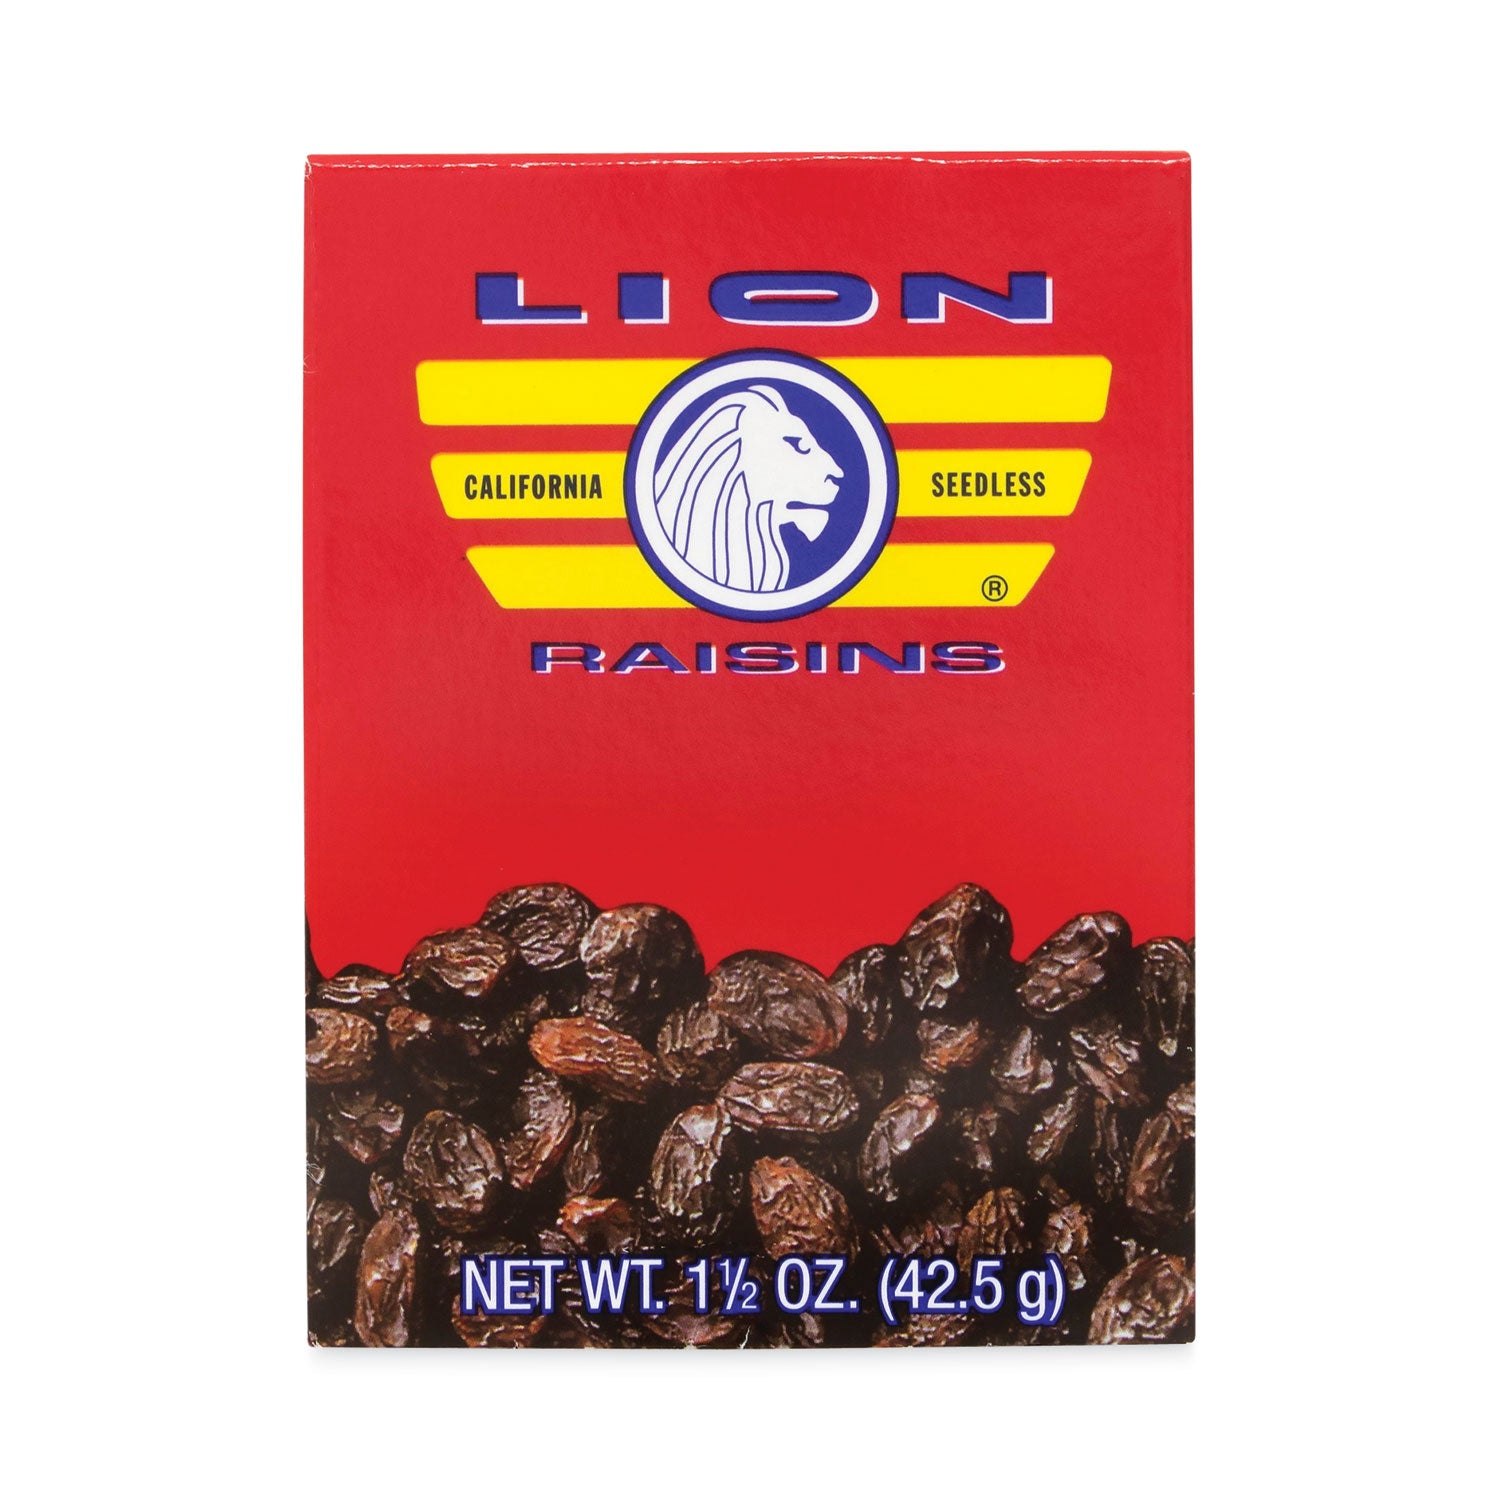 california-seedless-raisins-15-oz-box-6-pack-ships-in-1-3-business-days_grr30801001 - 1